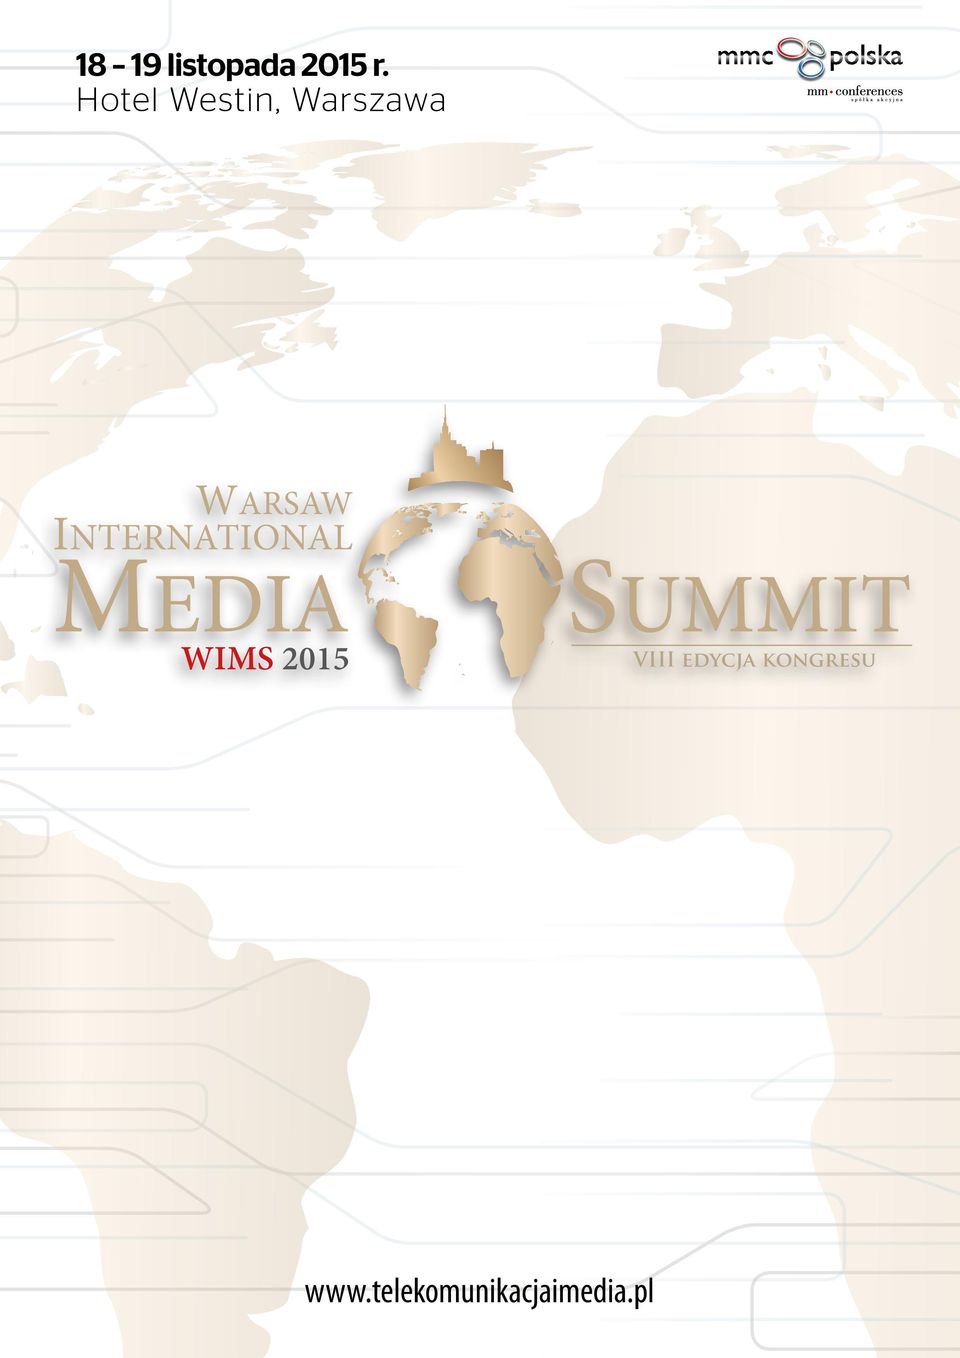 INTERNATIONAL MEDIA WIMS 2015